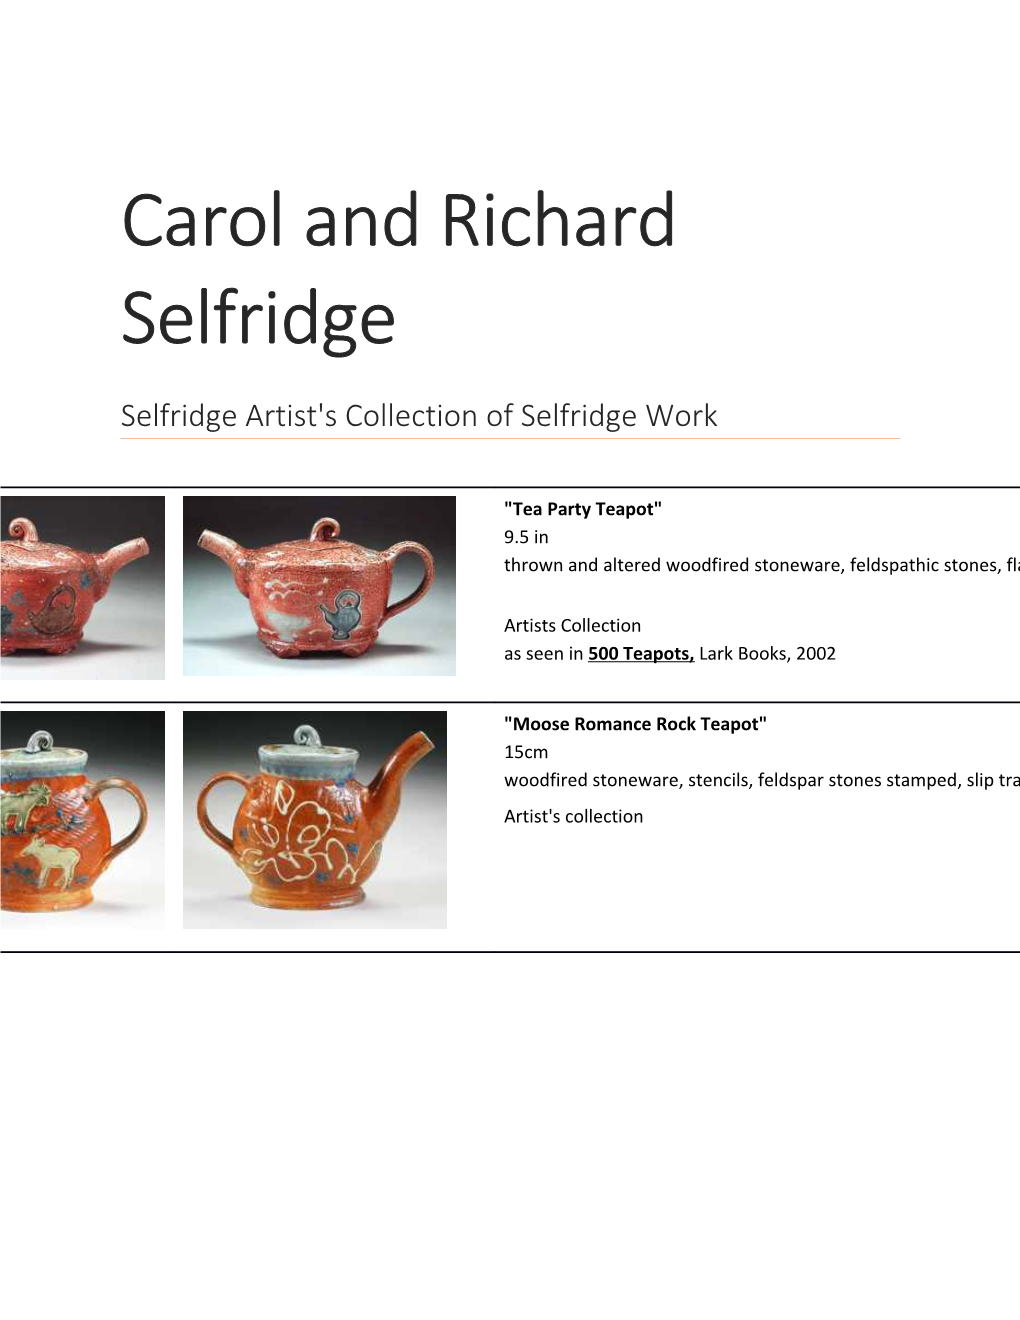 Selfridge Artist's Collection of Selfridge Work